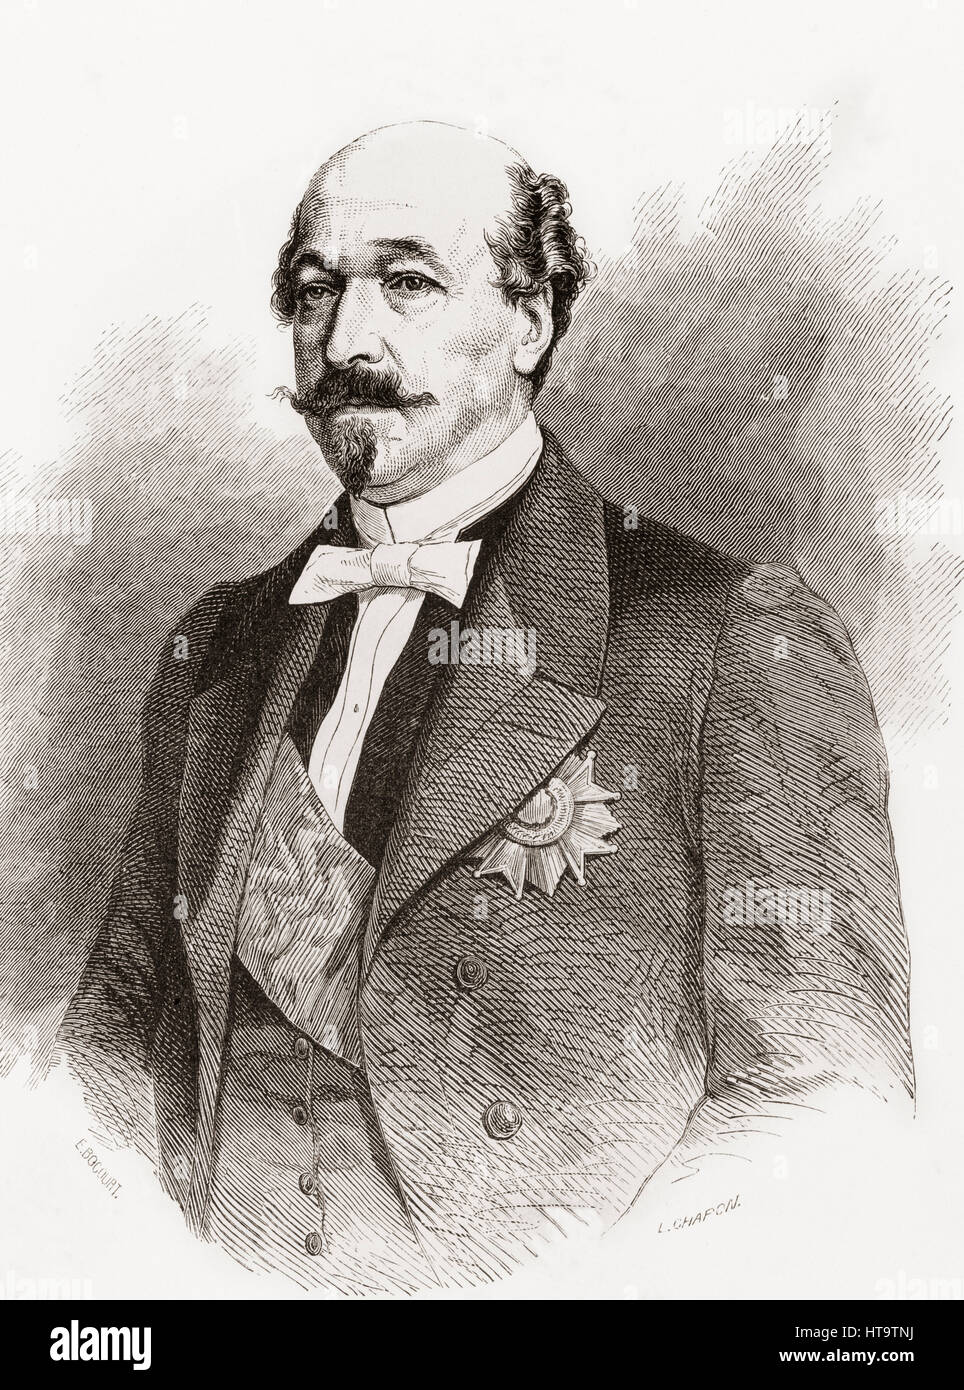 Charles Auguste Louis Joseph Demorny or de Morny, 1er Duc de Morny, 1811 - 1865.  French statesman.  From Album Evenement, Prime du Journal L'Evenement, published 1865. Stock Photo